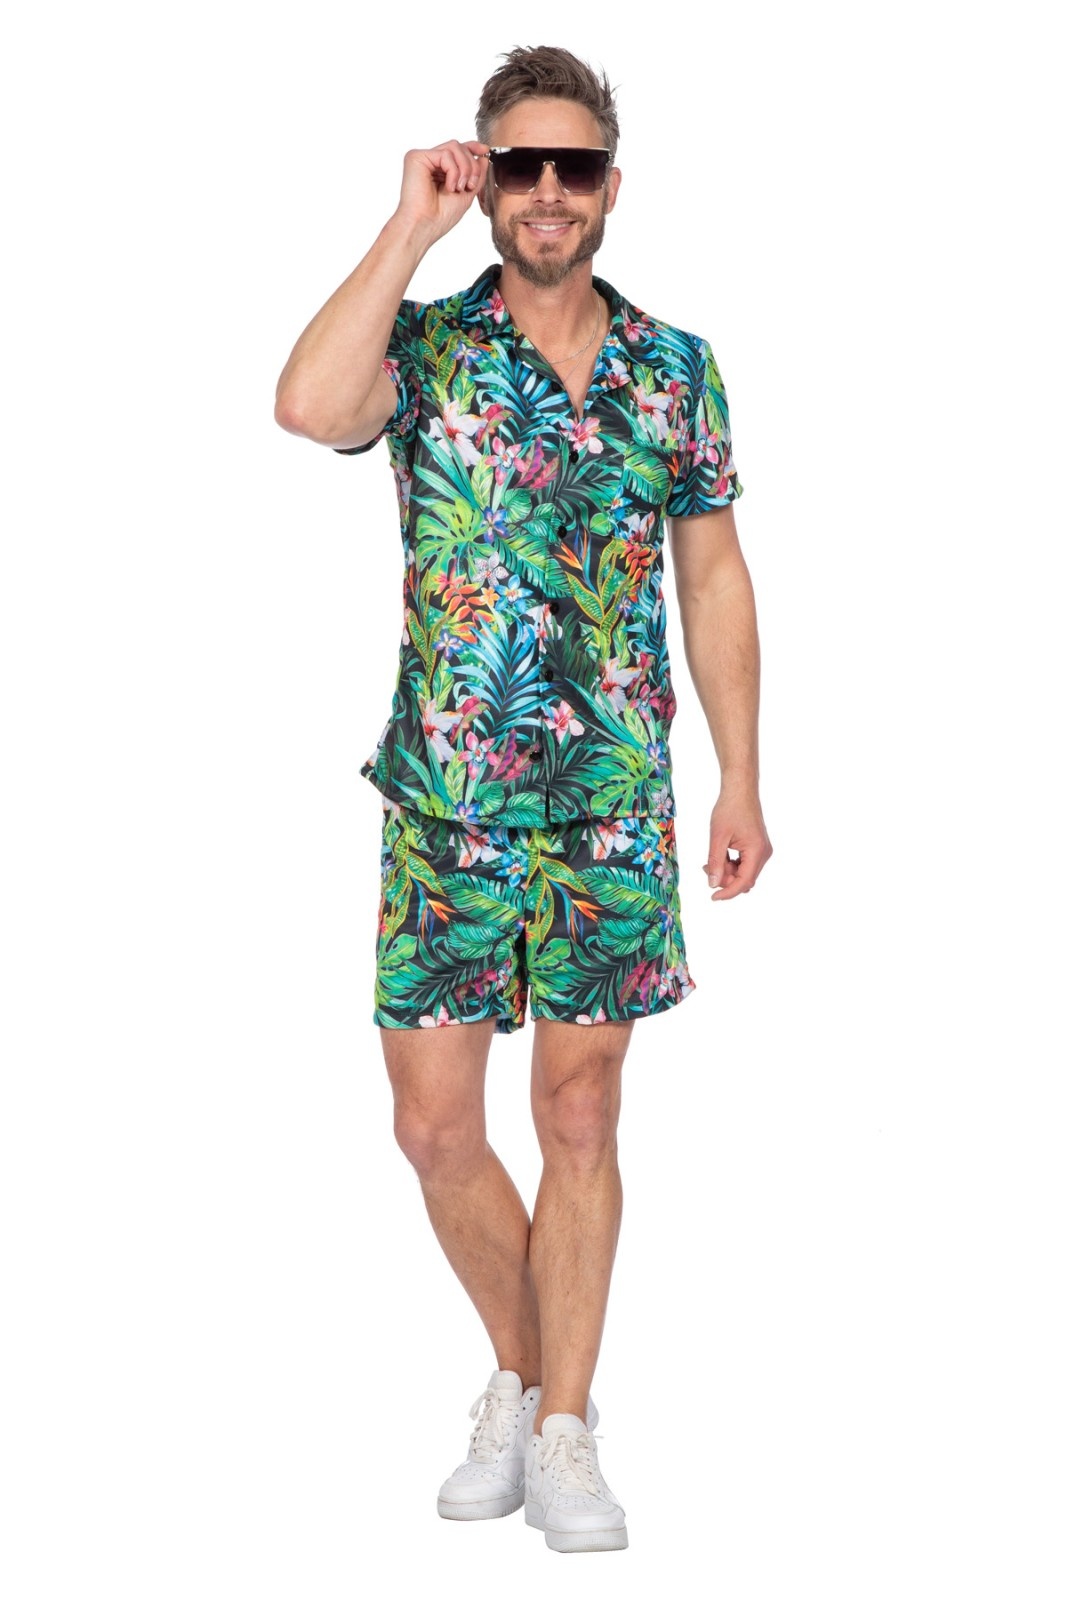 Wilbers - Hawaii & Carribean & Tropisch Kostuum - Hawaii Harrie Op Het Strand - Man - groen,zwart - Small - Carnavalskleding - Verkleedkleding